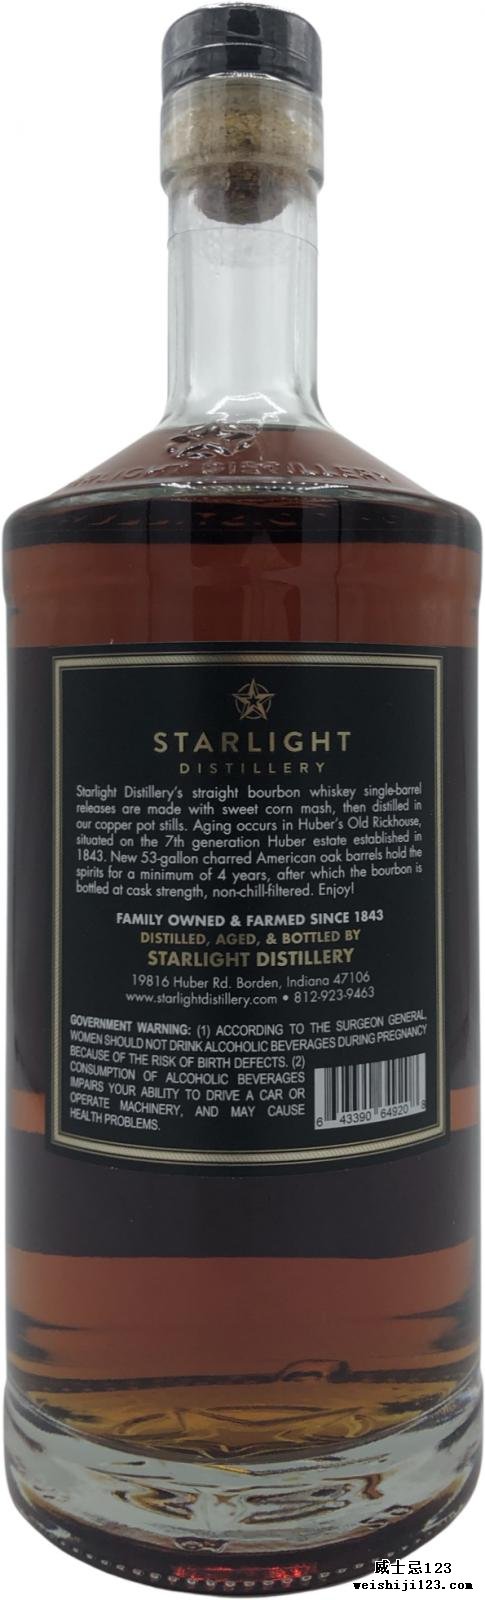 Starlight Distillery 04-year-old